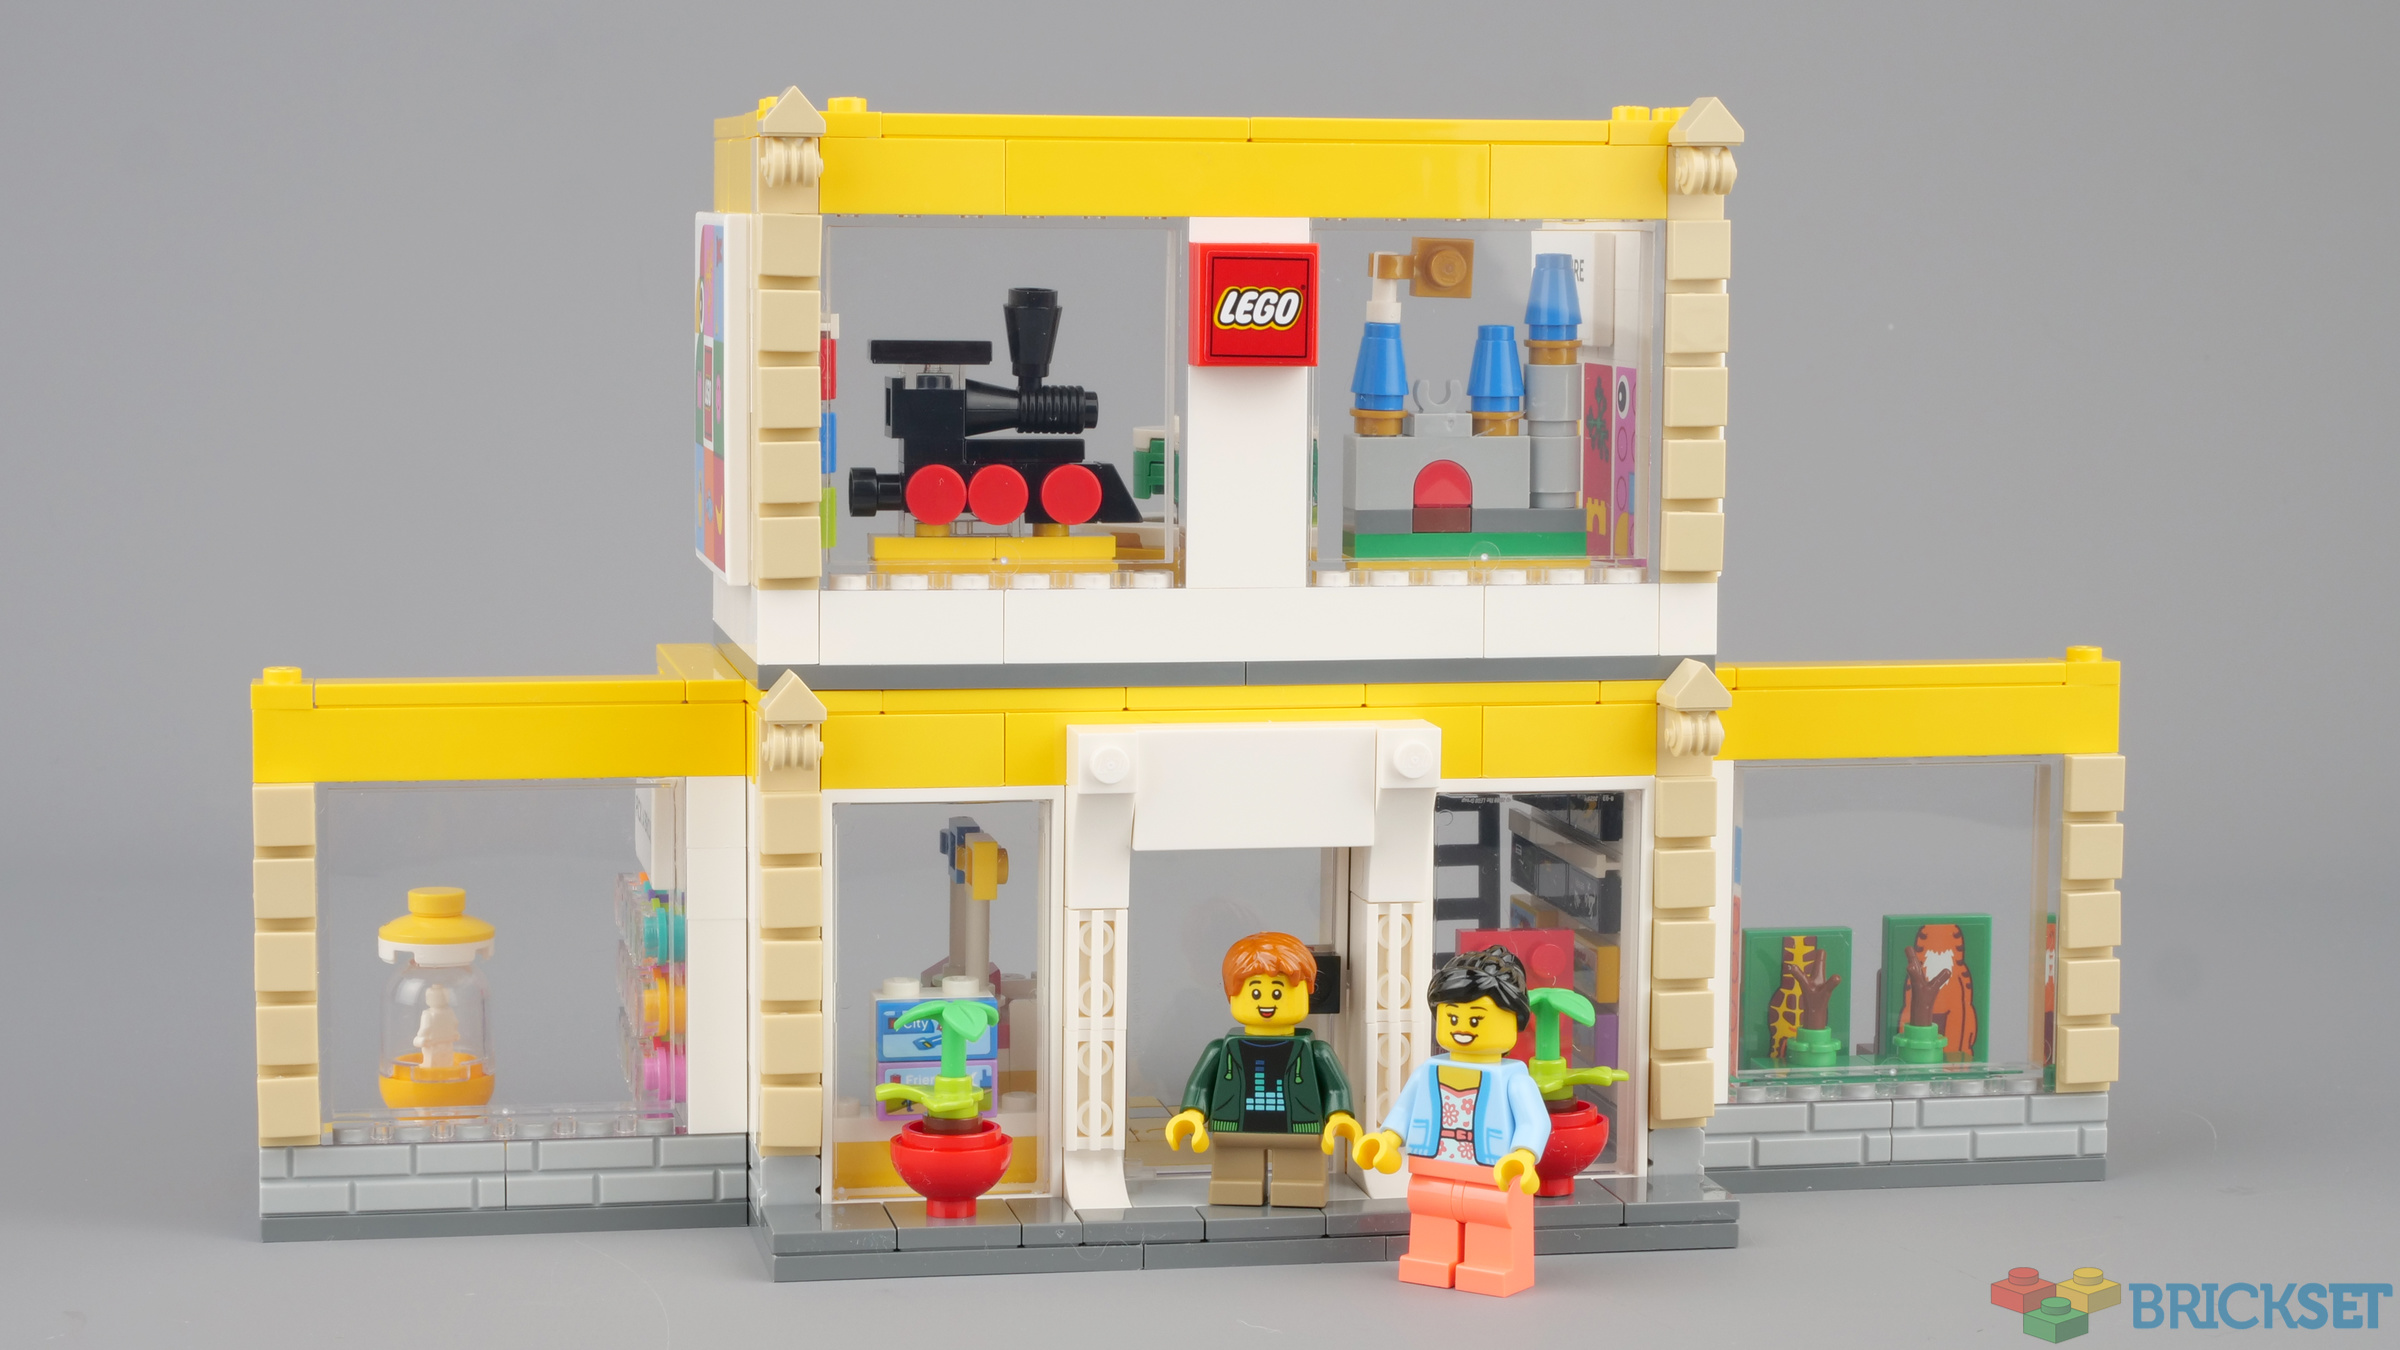 Pinpoint Nervesammenbrud Grand Review: 40574 LEGO Store | Brickset: LEGO set guide and database